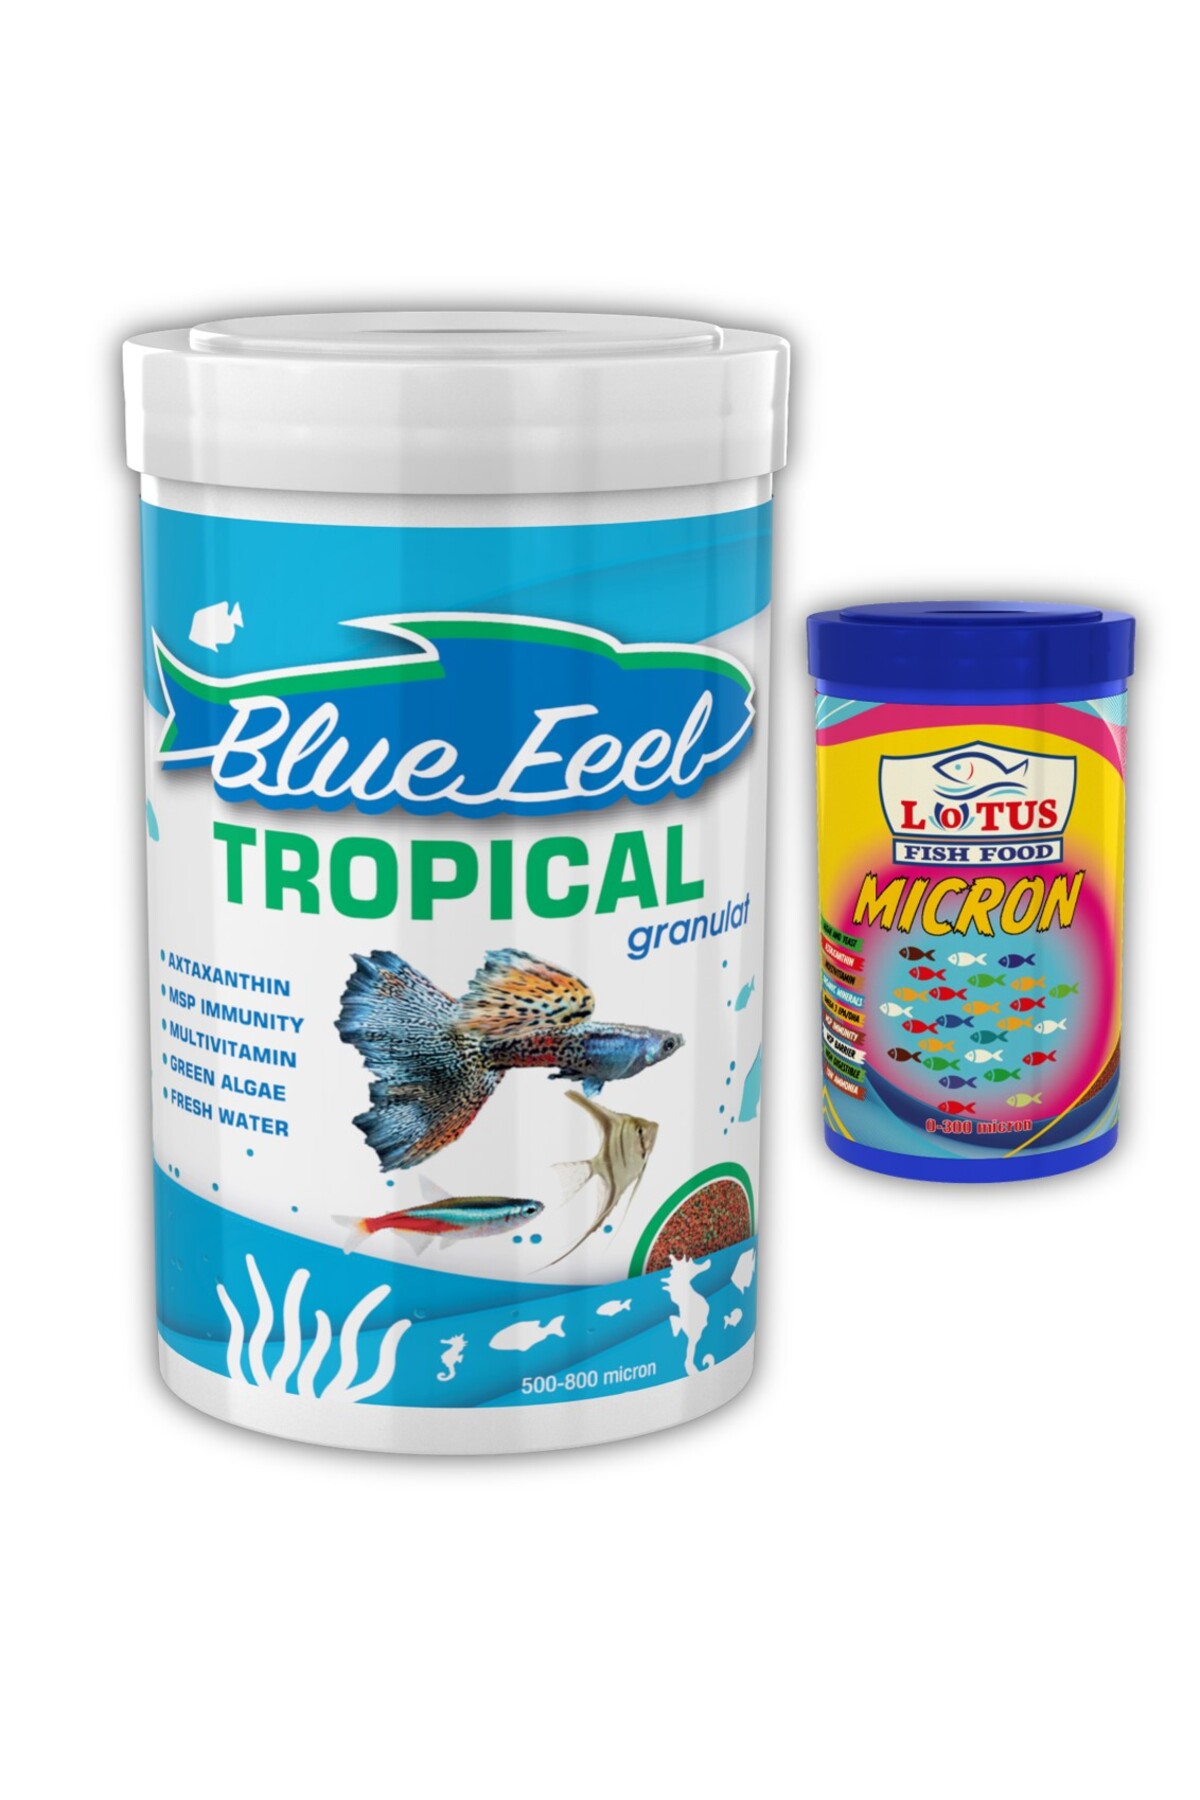 Blue Feel Tropical Mix Granulat 1000ml, Lotus Micron 100ml Kutu Balik Yemi